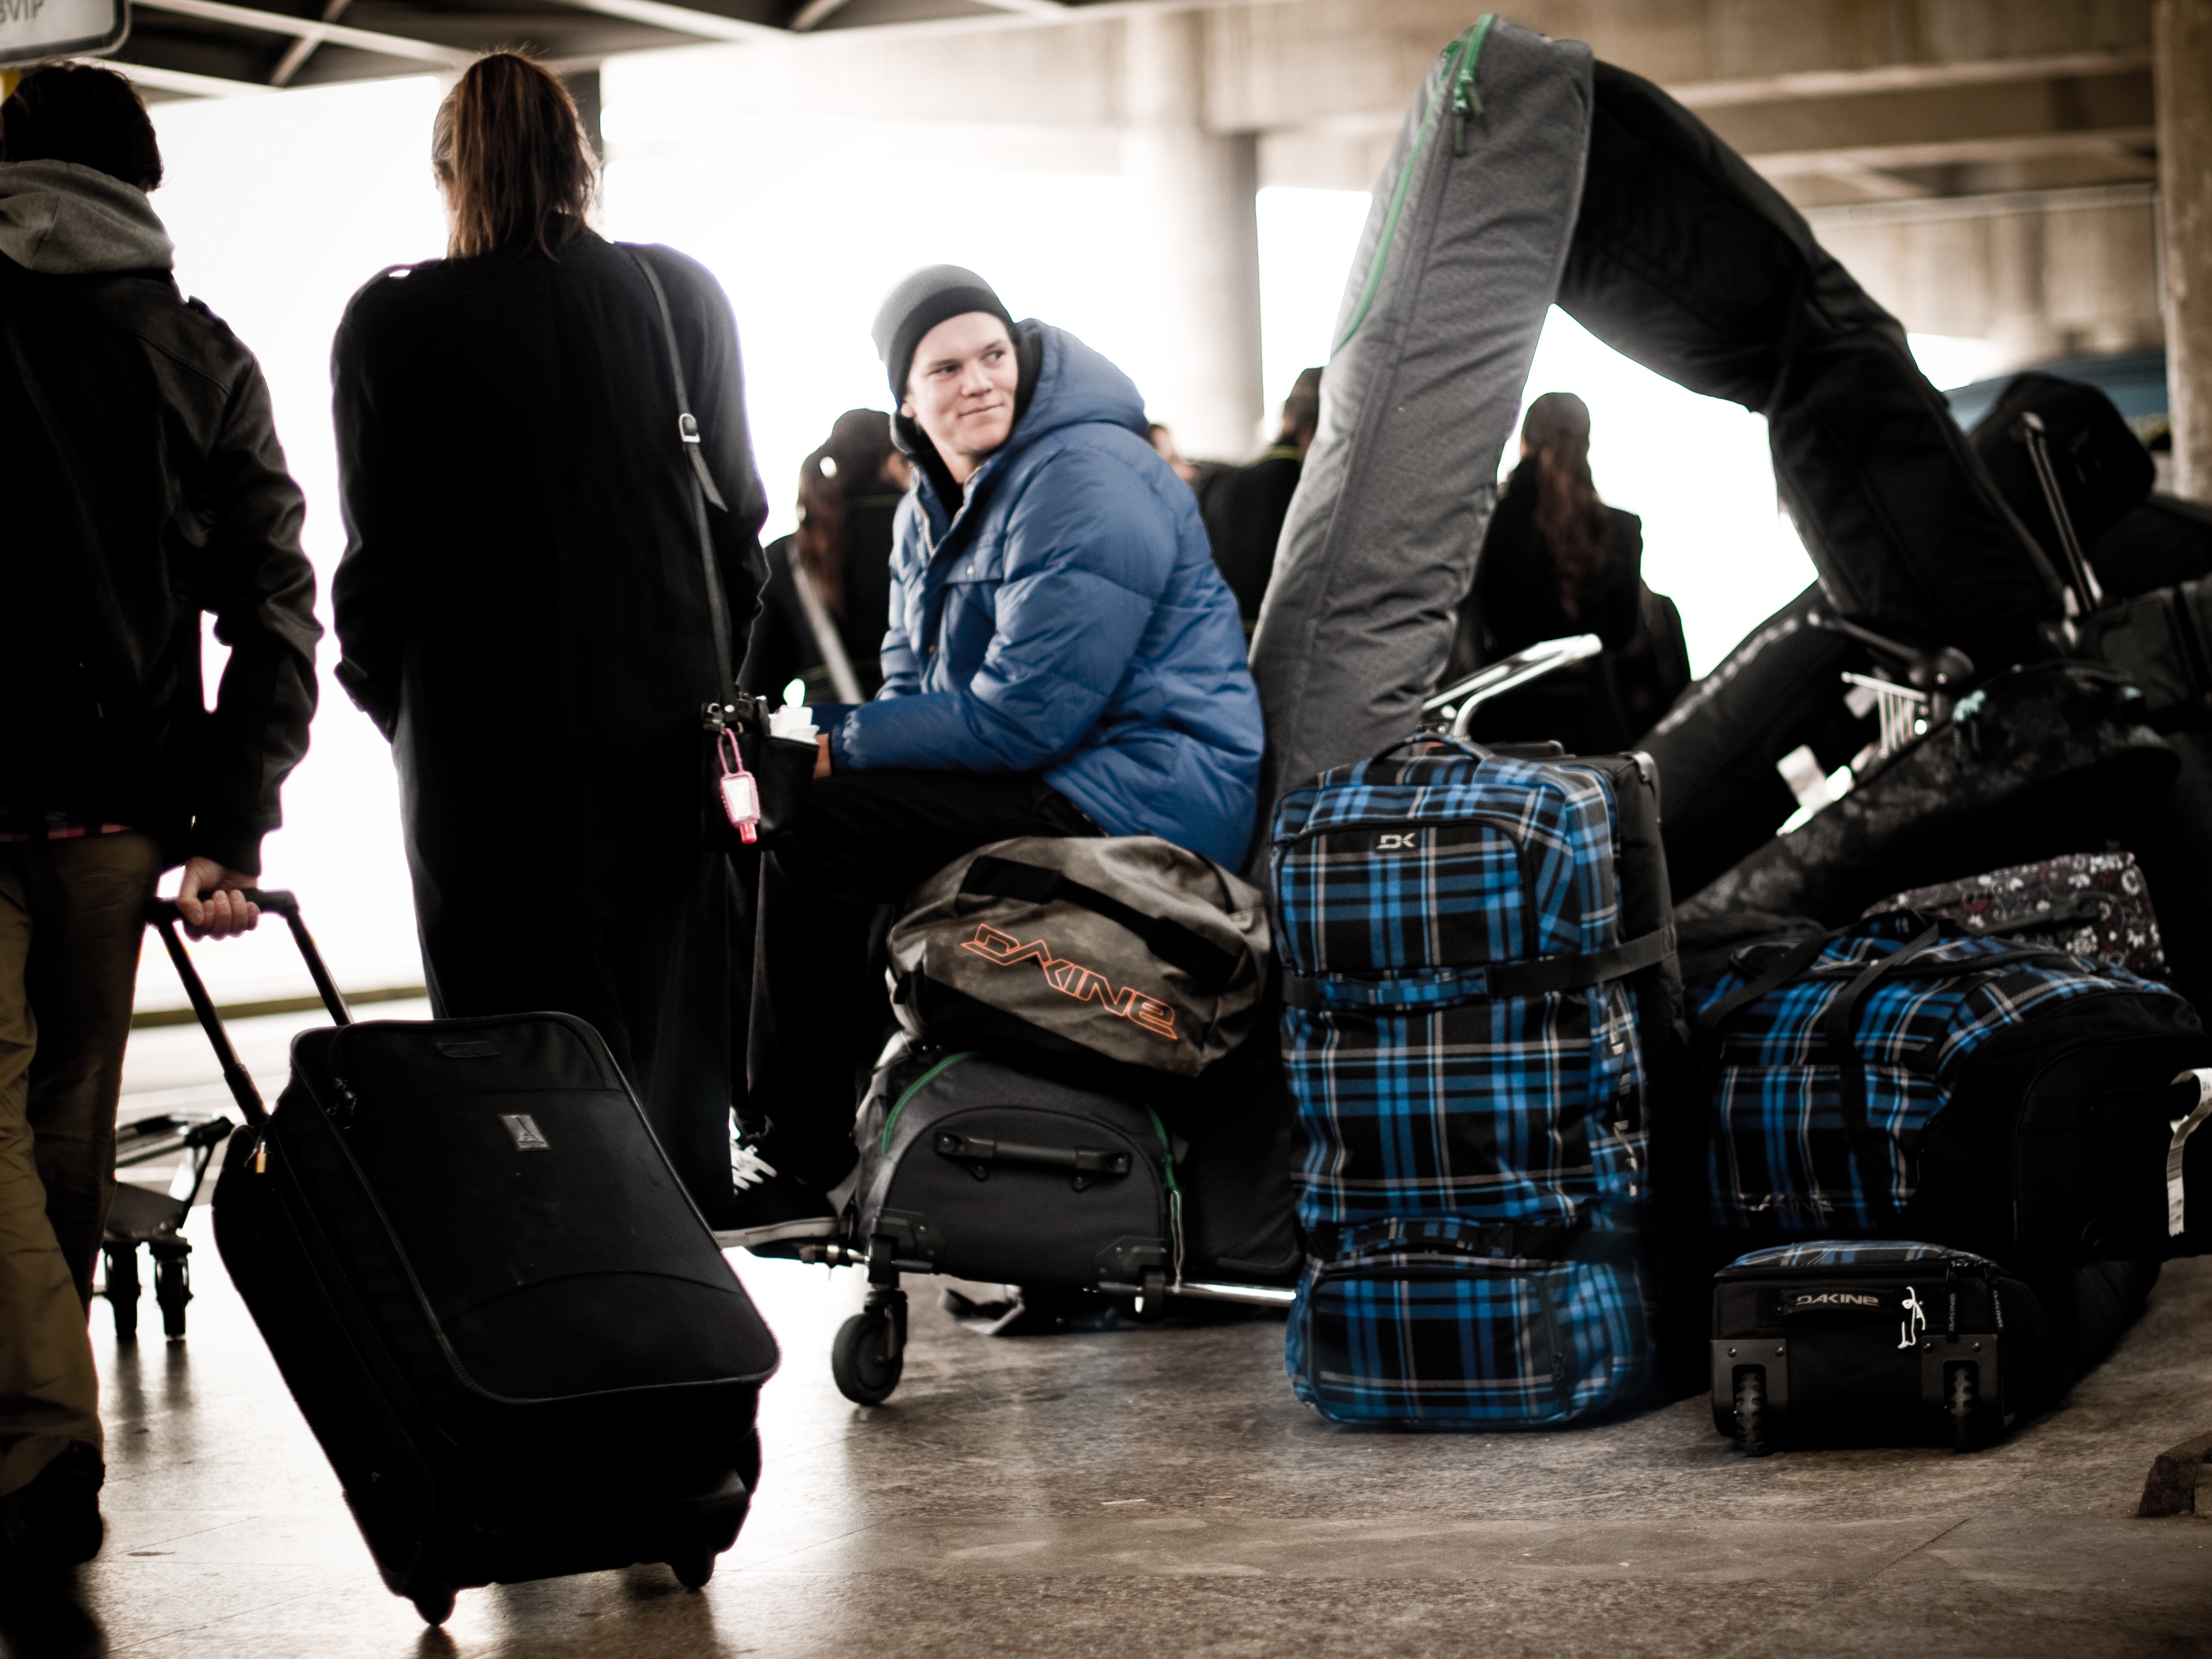 Начнет везти. Турист с чемоданом. Чемодан в аэропорту. Люди с чемоданами в аэропорту. Парень с чемоданом.